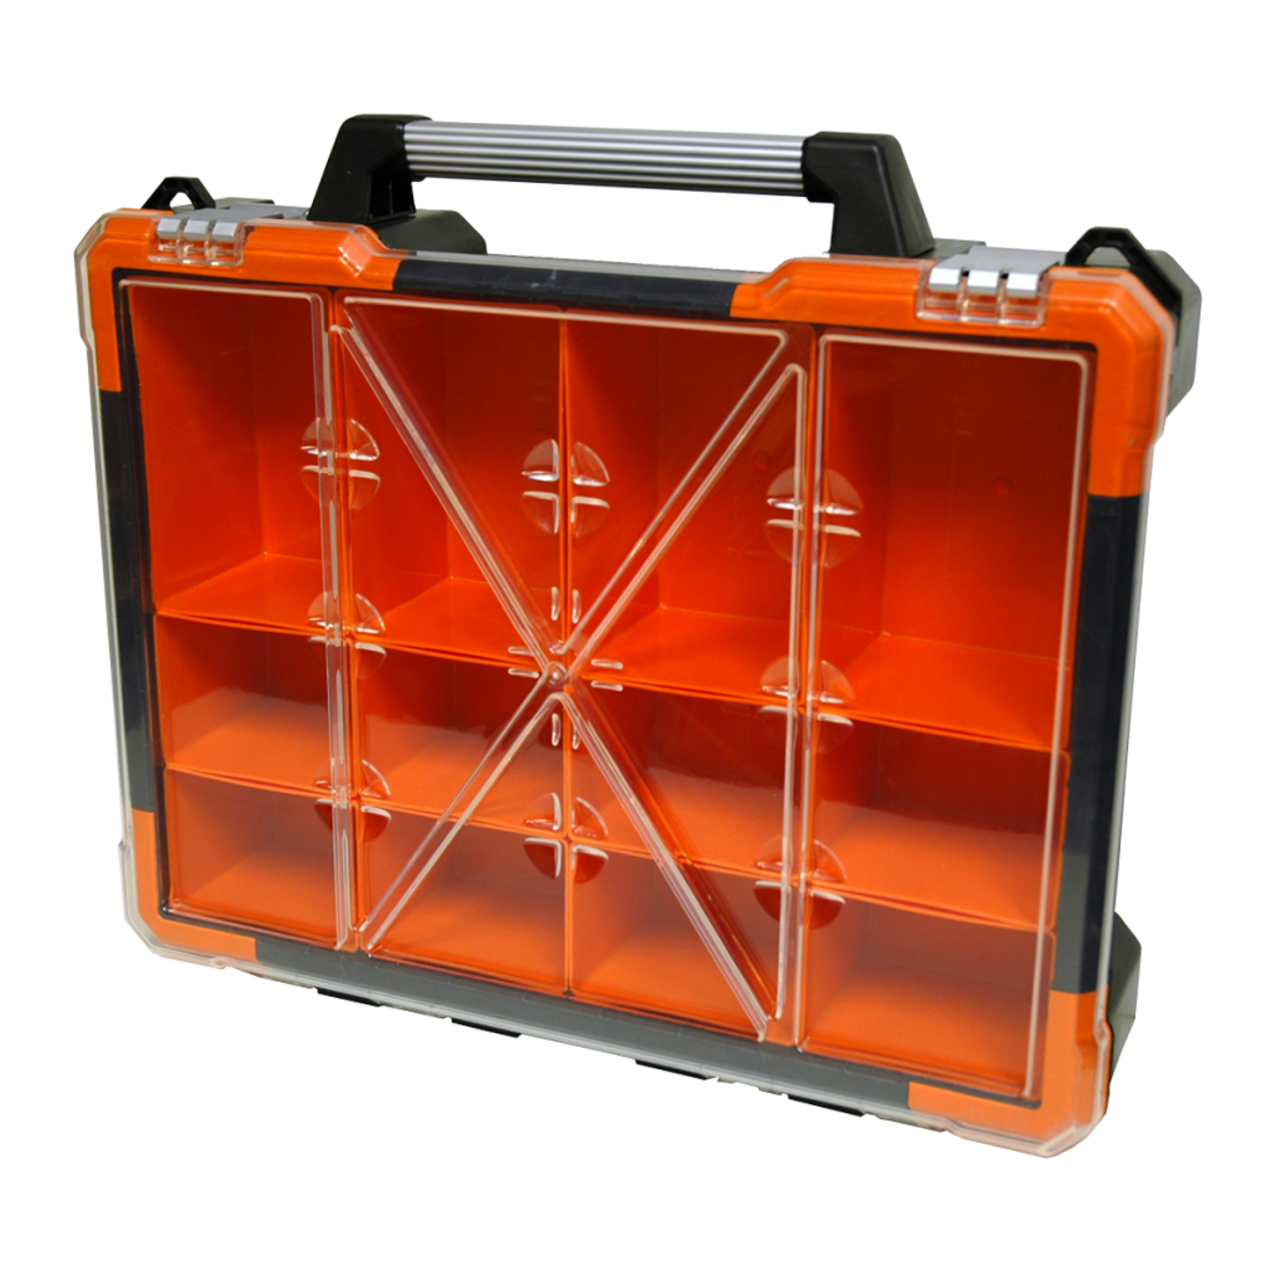 Homak HA01112019 12-Bin Portable Plastic Tool Storage Organizer